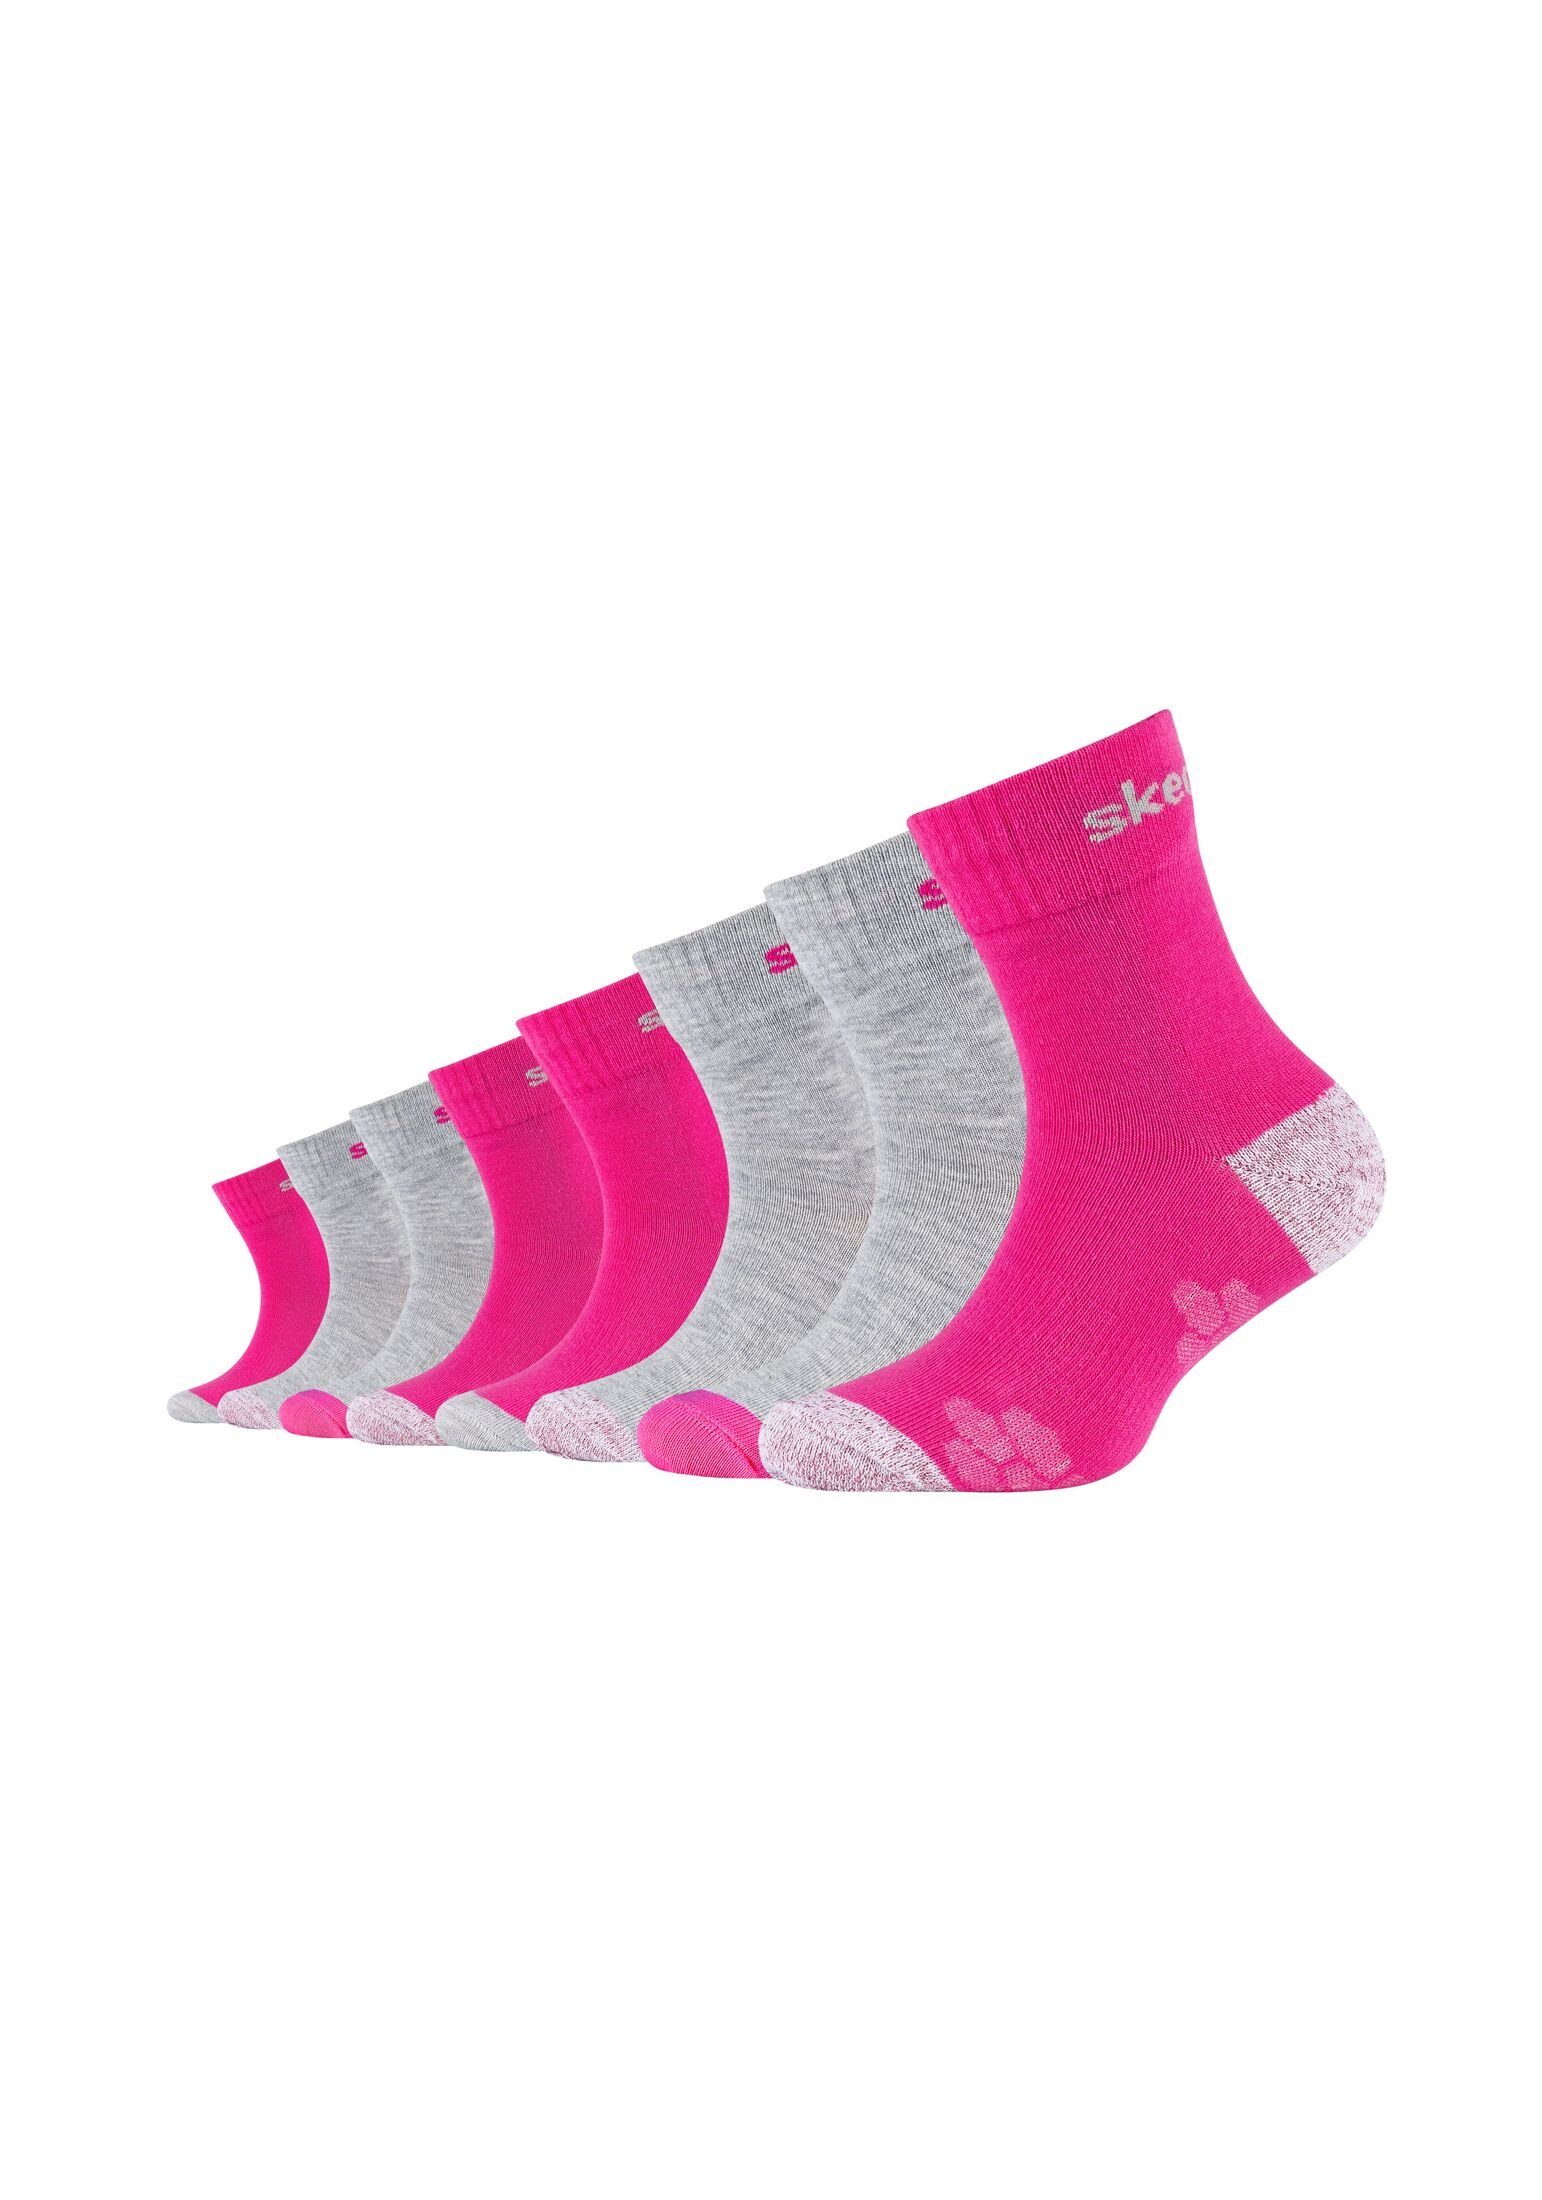 Skechers Socken Socken 8er Pack shocking pink mix